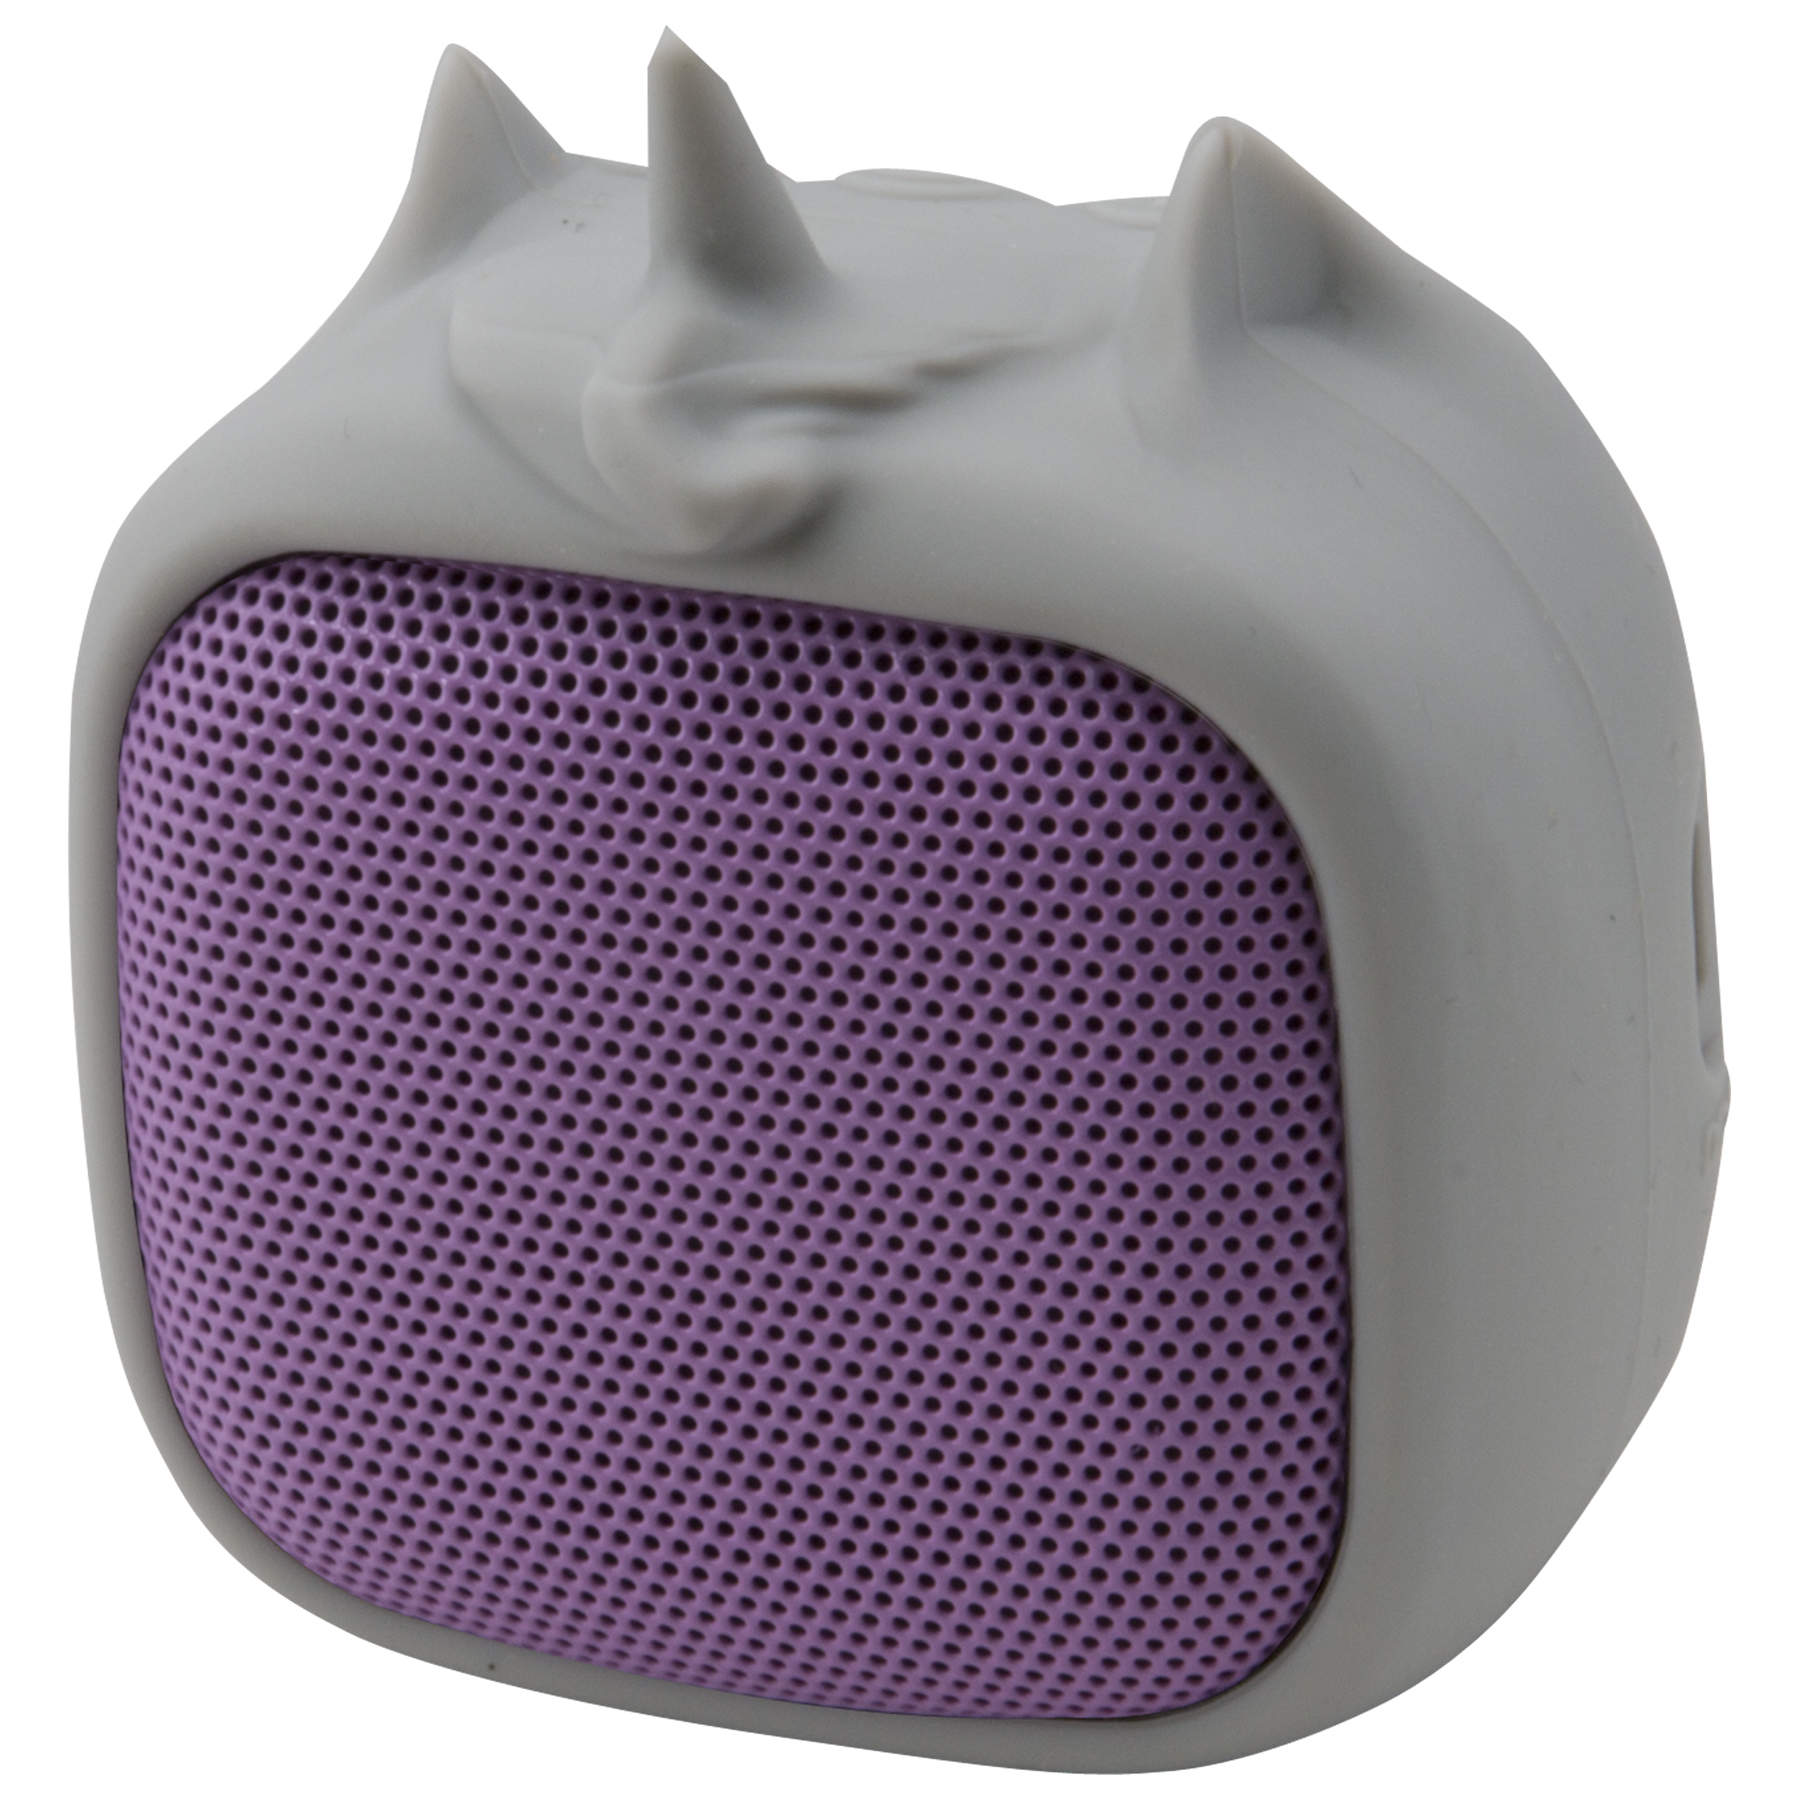 iLive Bluetooth Wild Tailz Unicorn Wireless Speaker, Rechargeable, Grey/Purple, ISB19UNI - image 1 of 5